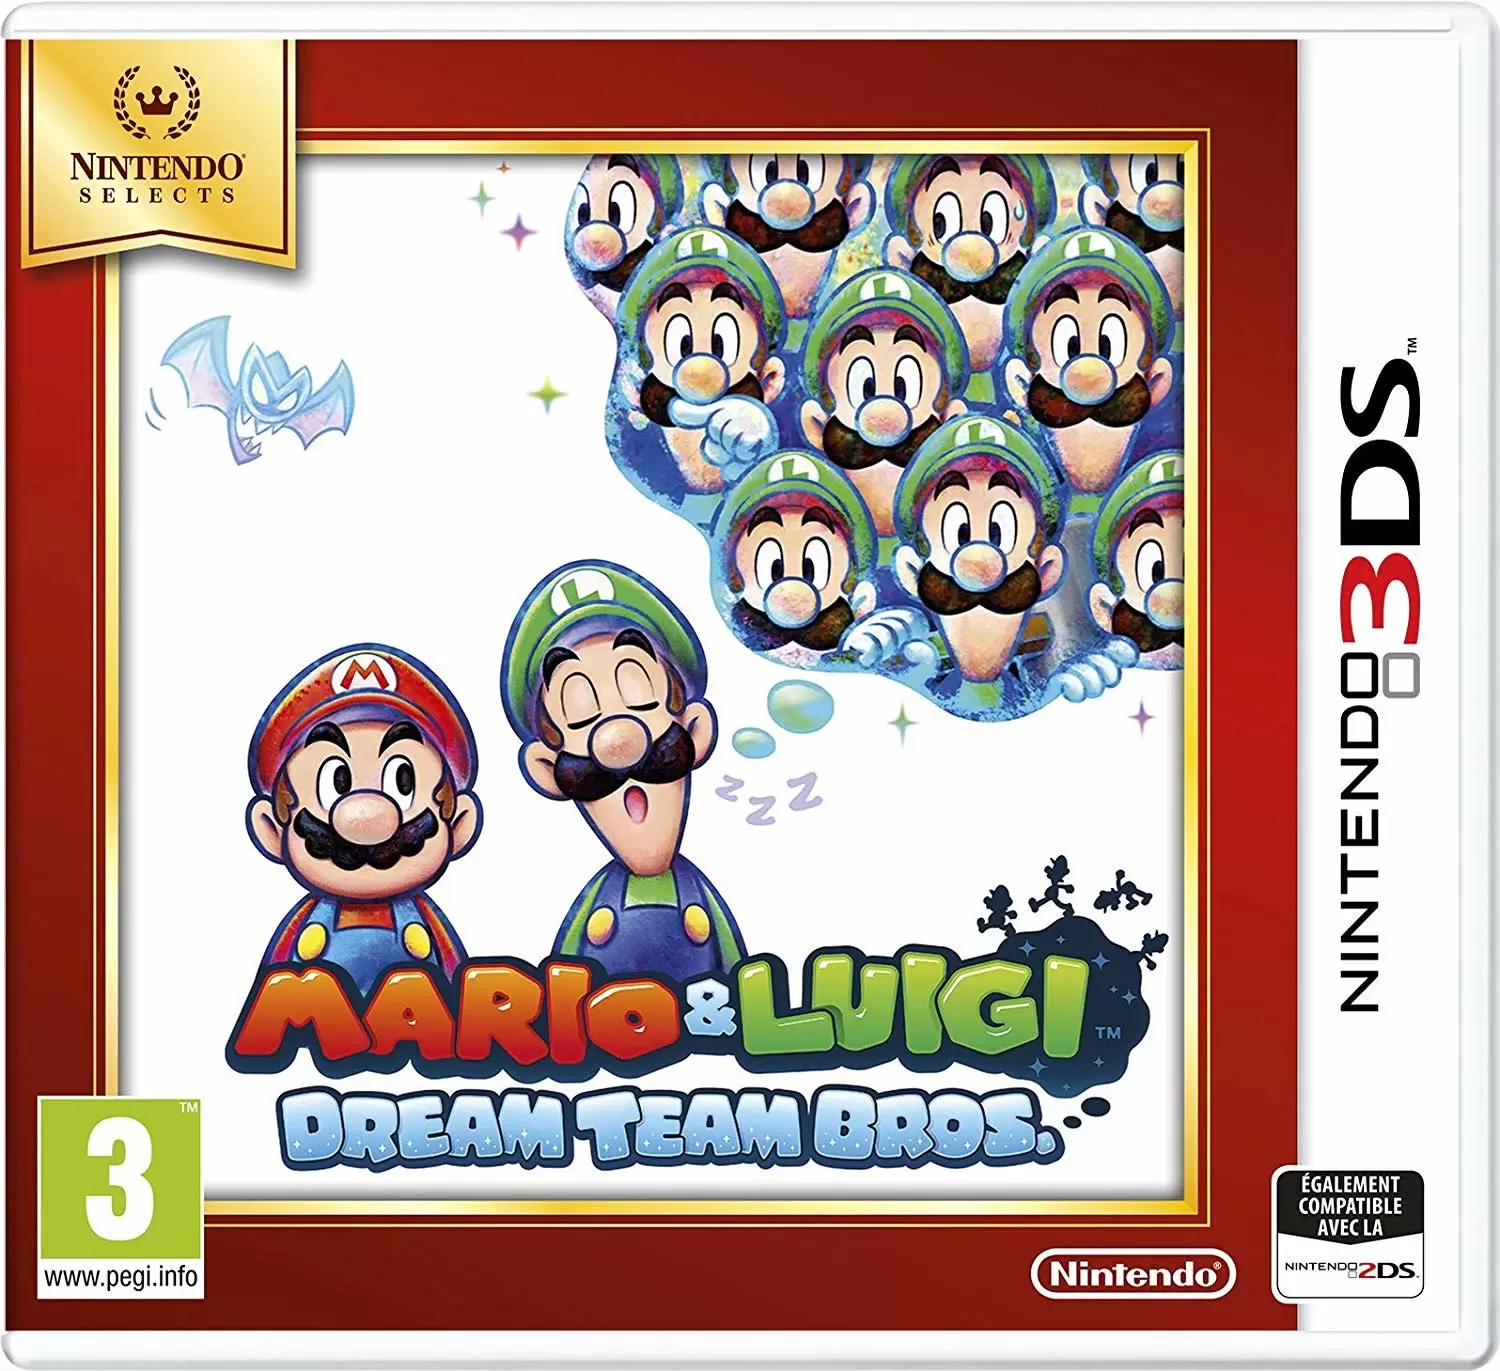 Nintendo 2DS / 3DS Games - Mario & Luigi Dream Team Bros. (Nintendo Selects)